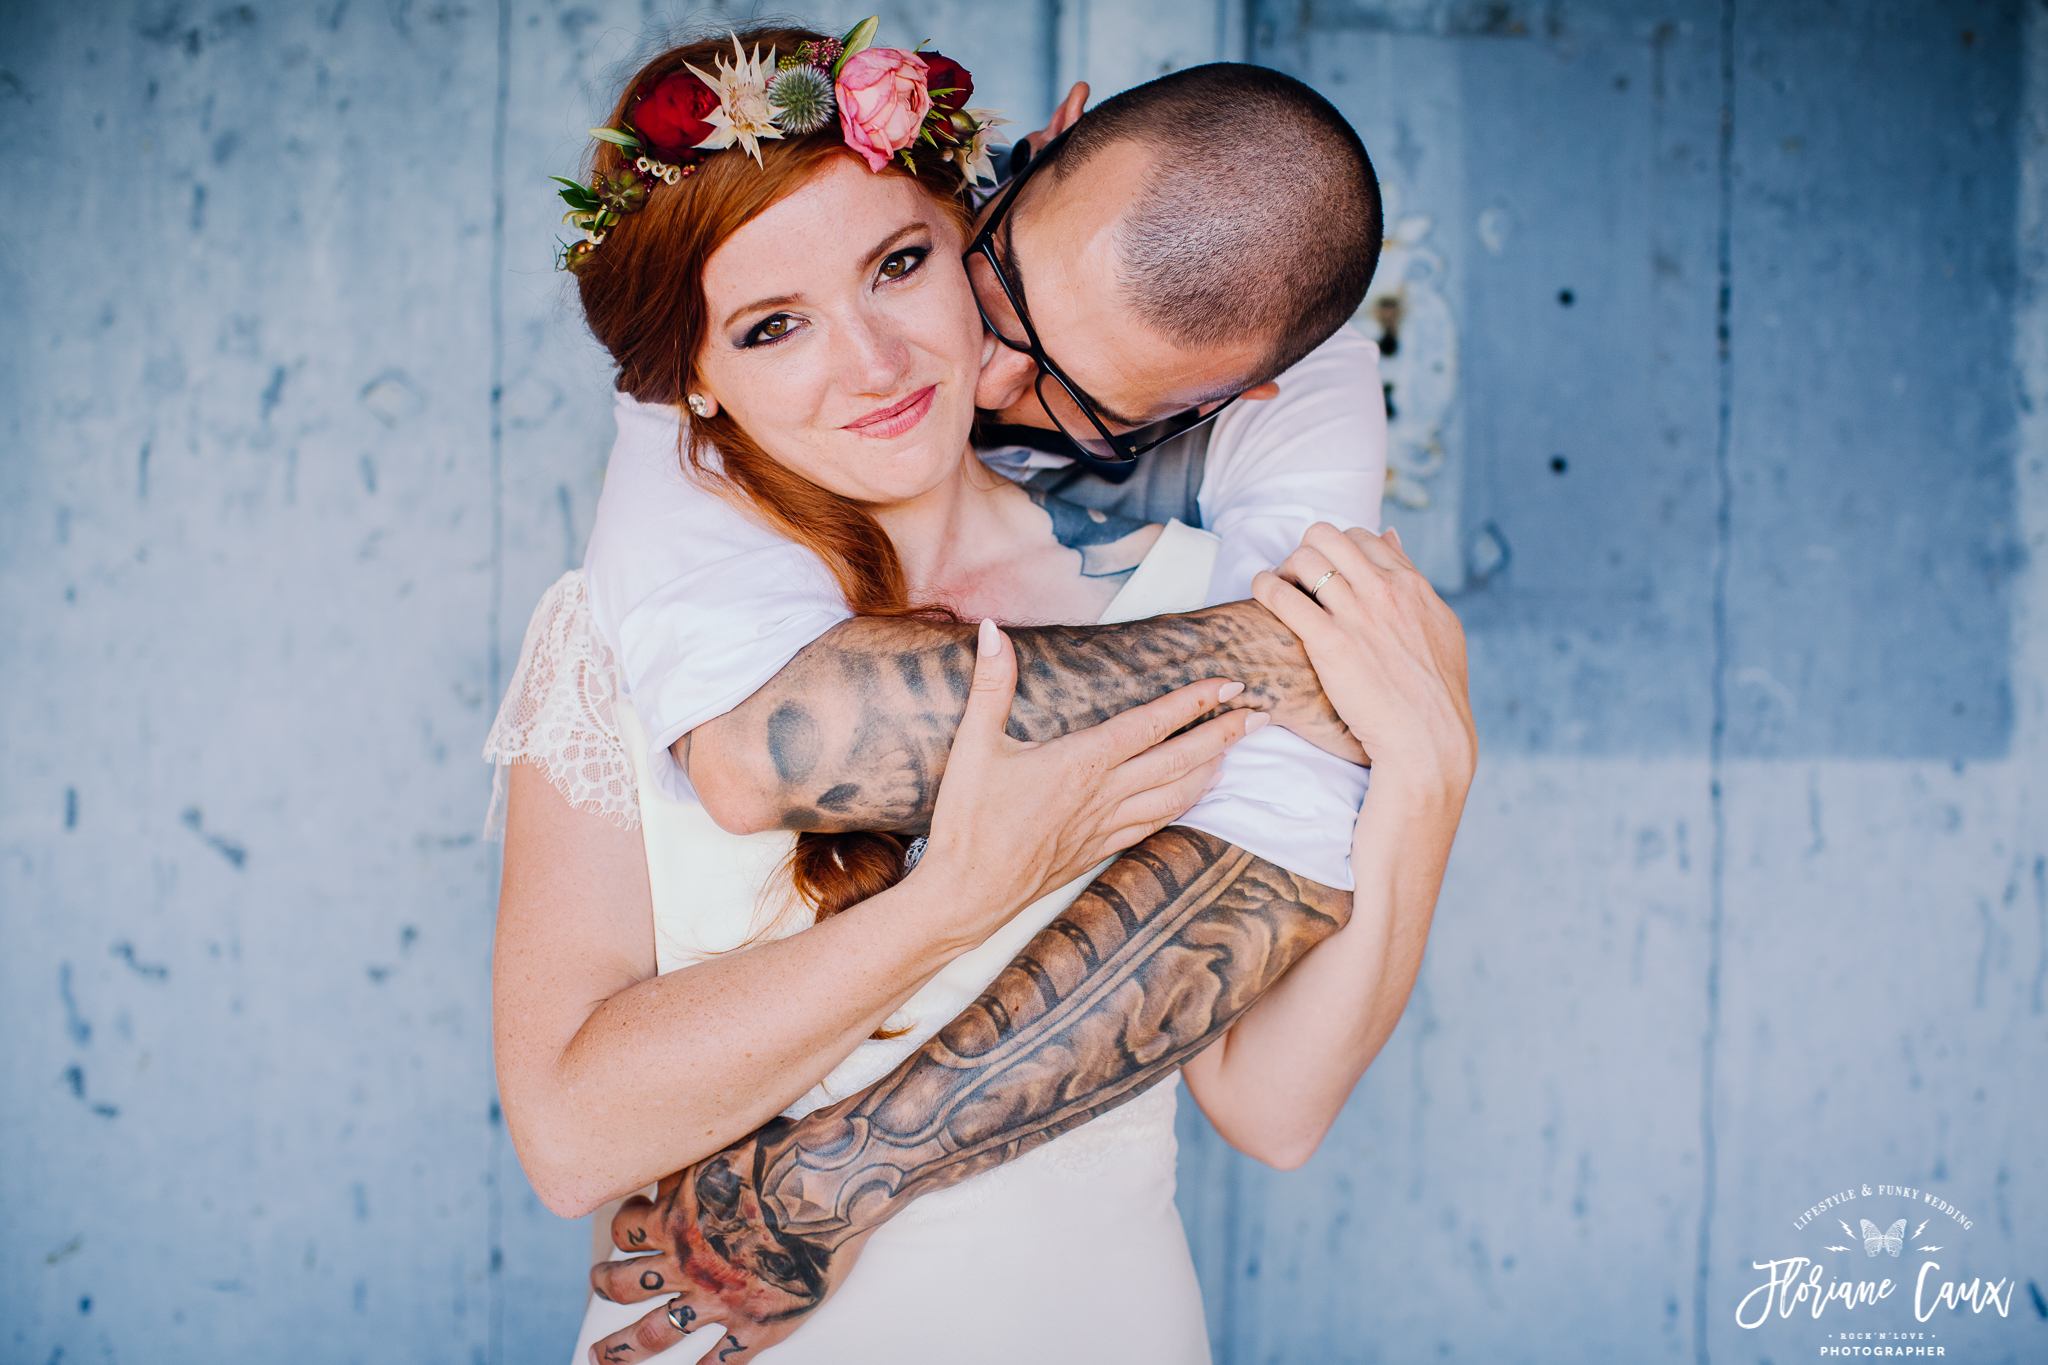 photographe-mariage-toulouse-rocknroll-maries-tatoues-floriane-caux-54